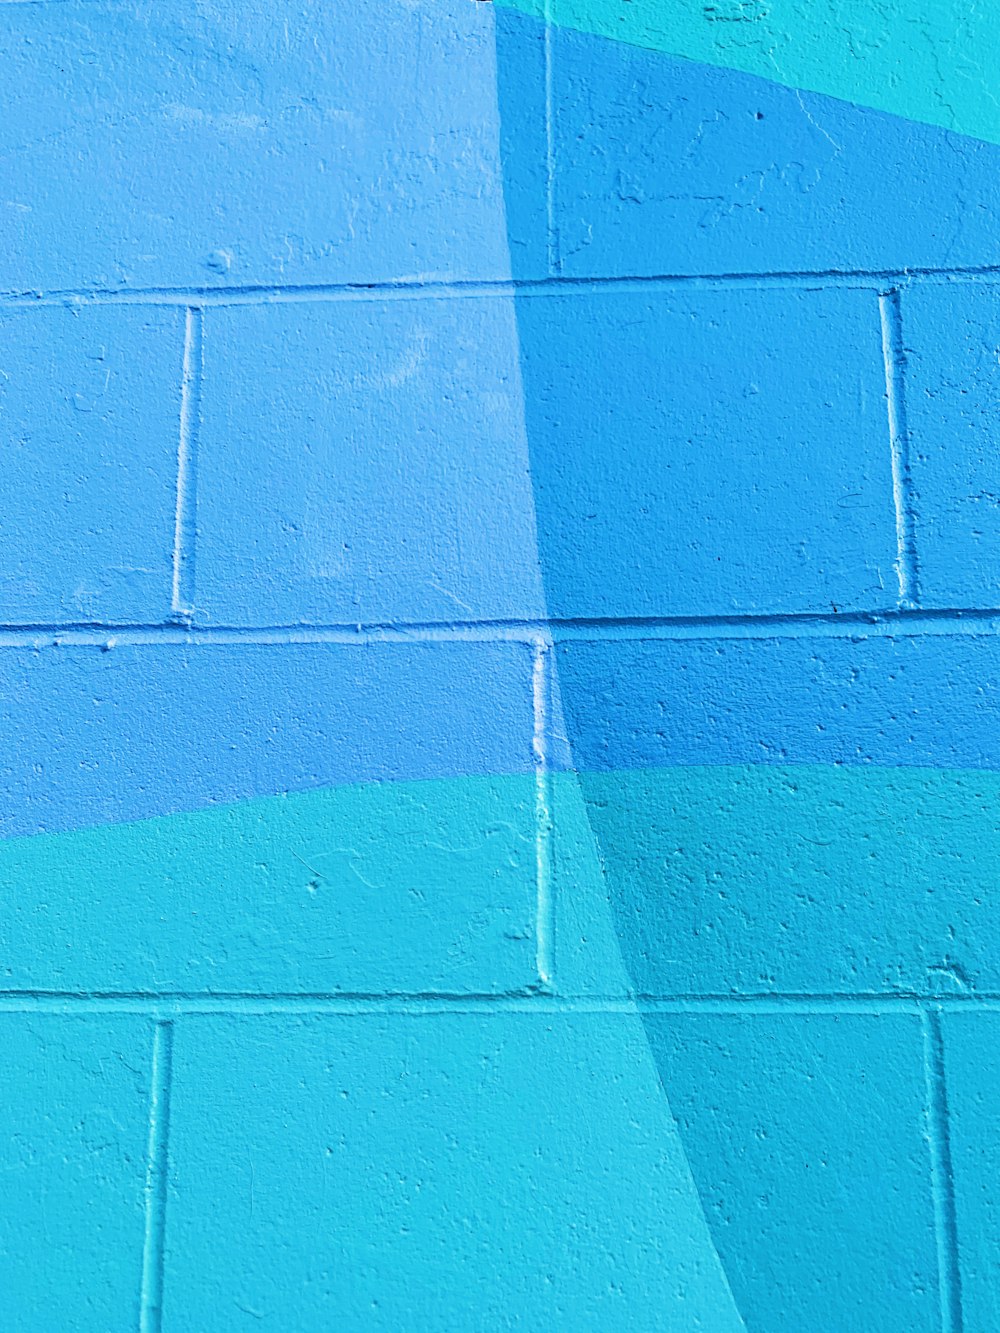 Muro azul